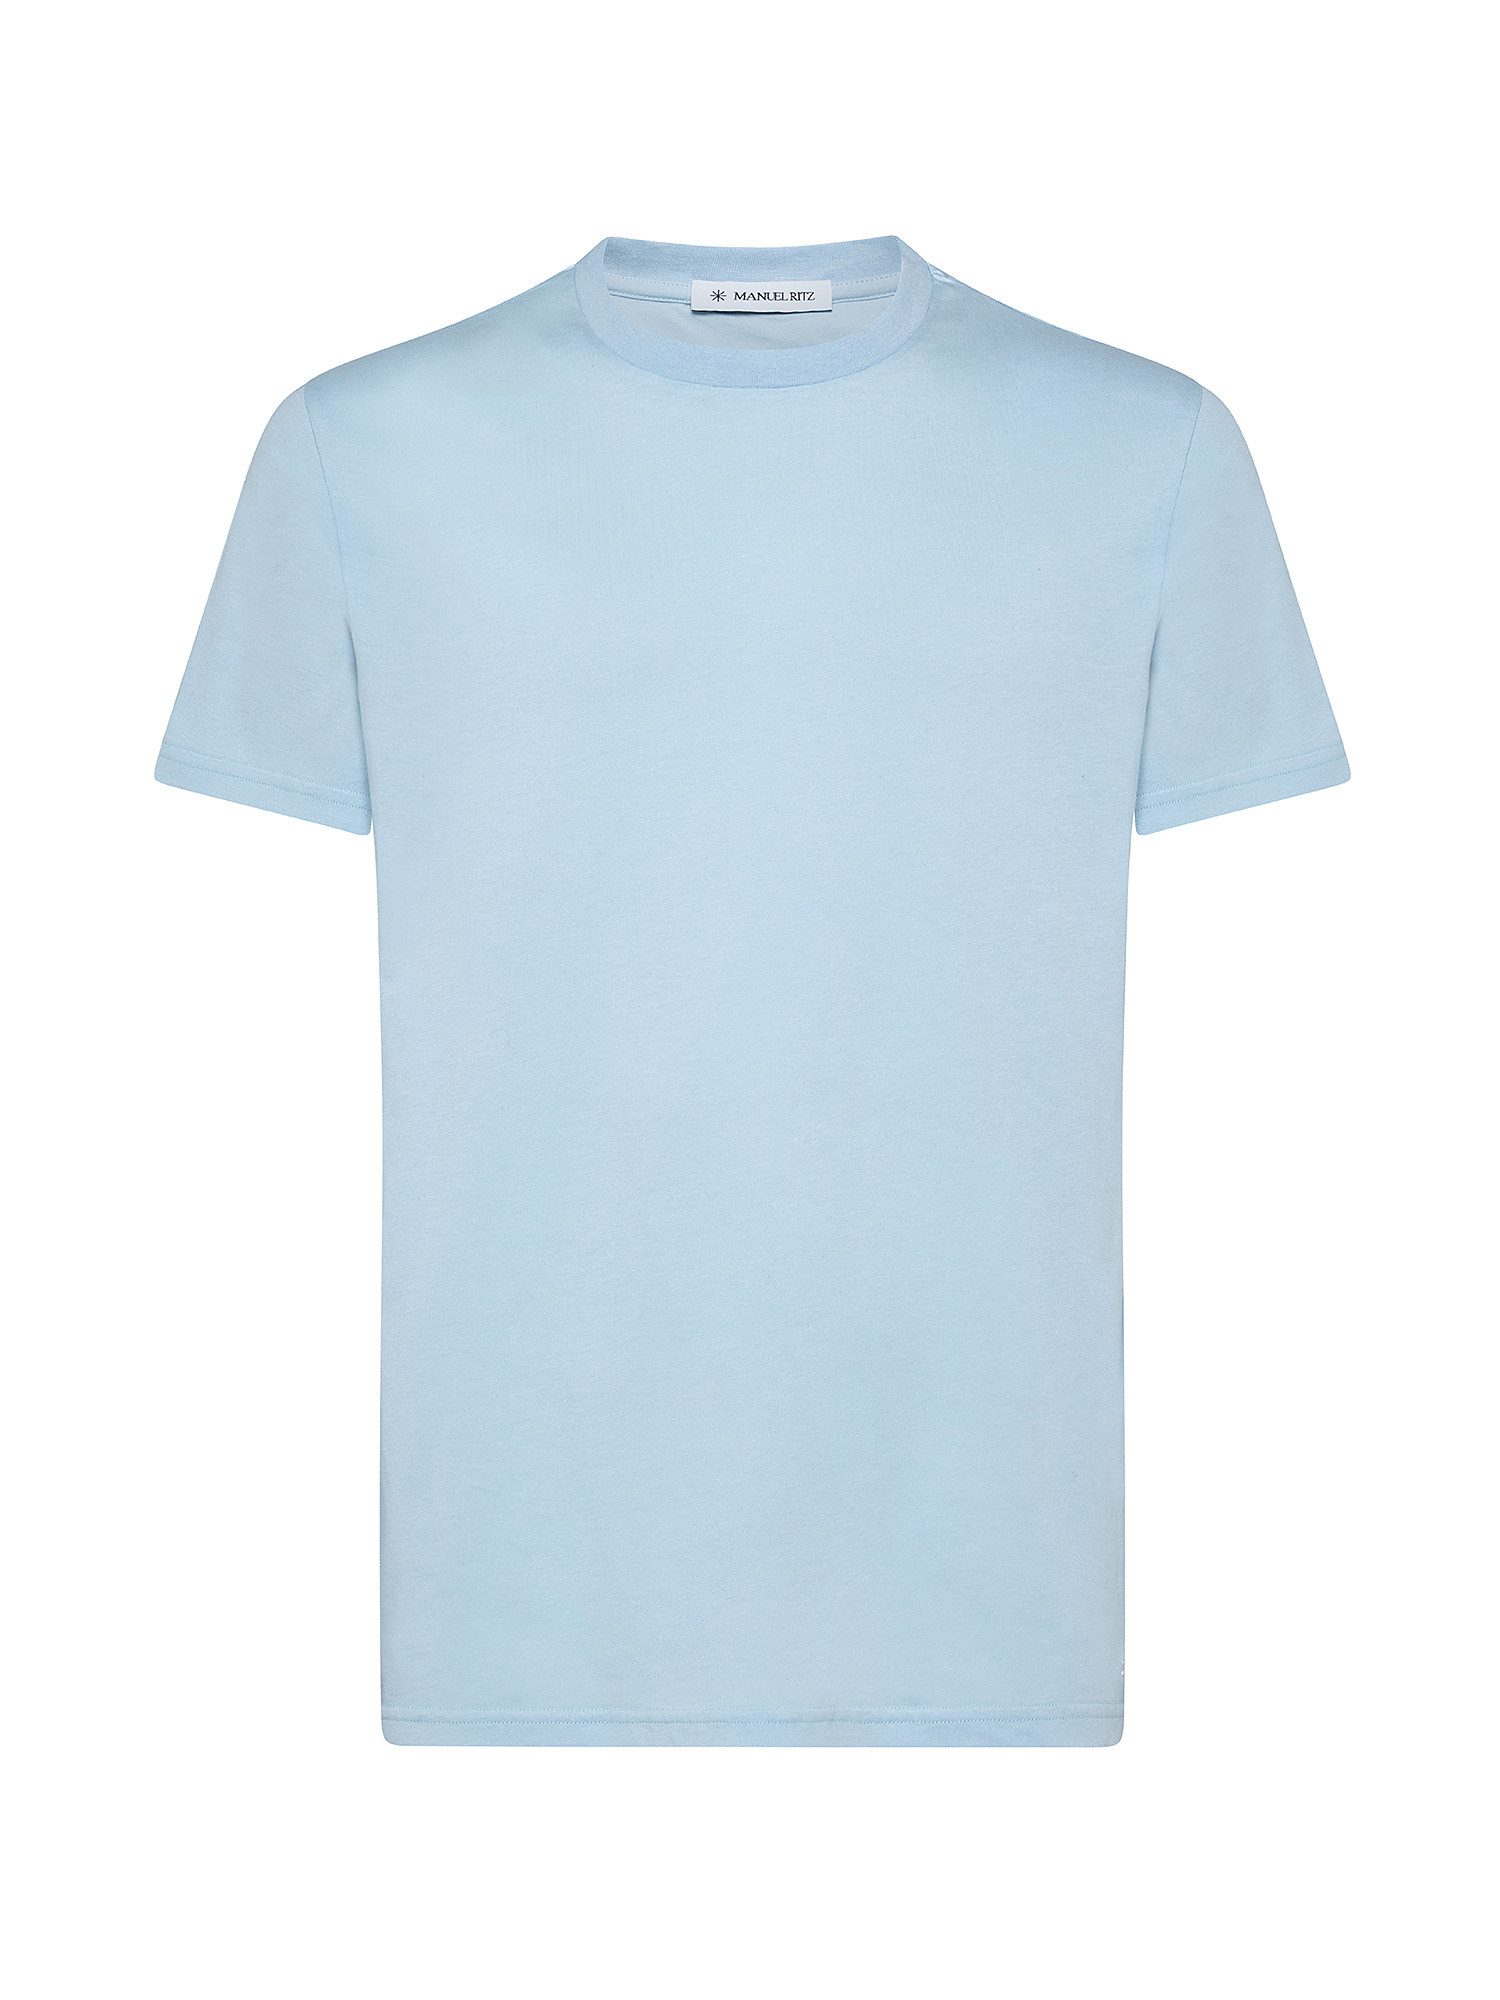 T-shirt girocollo, Azzurro, large image number 0